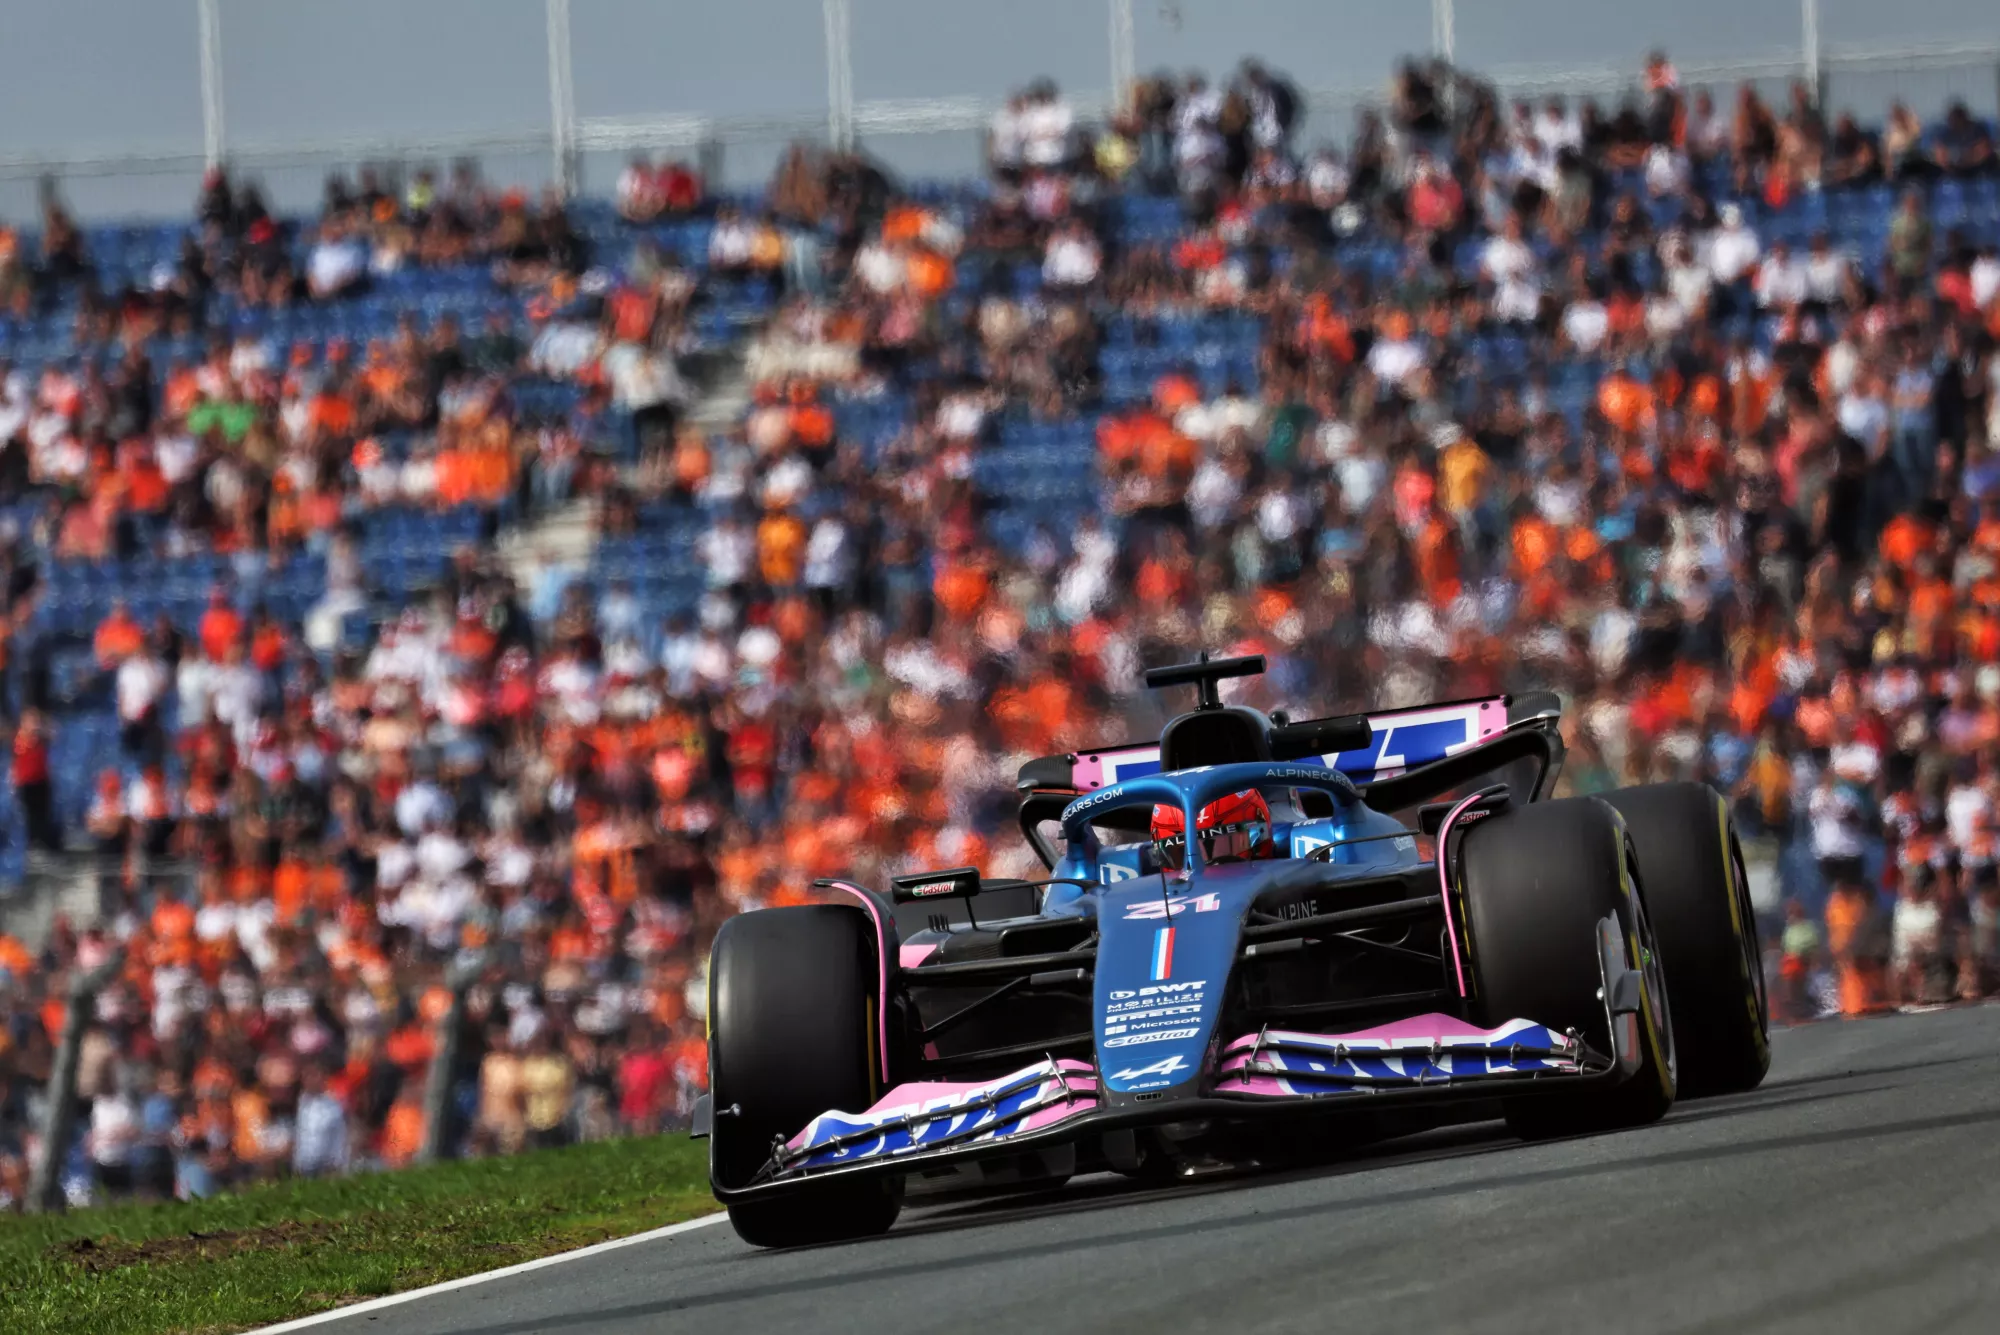 Back to business in Zandvoort as Formula 1 returns after summer shutdown